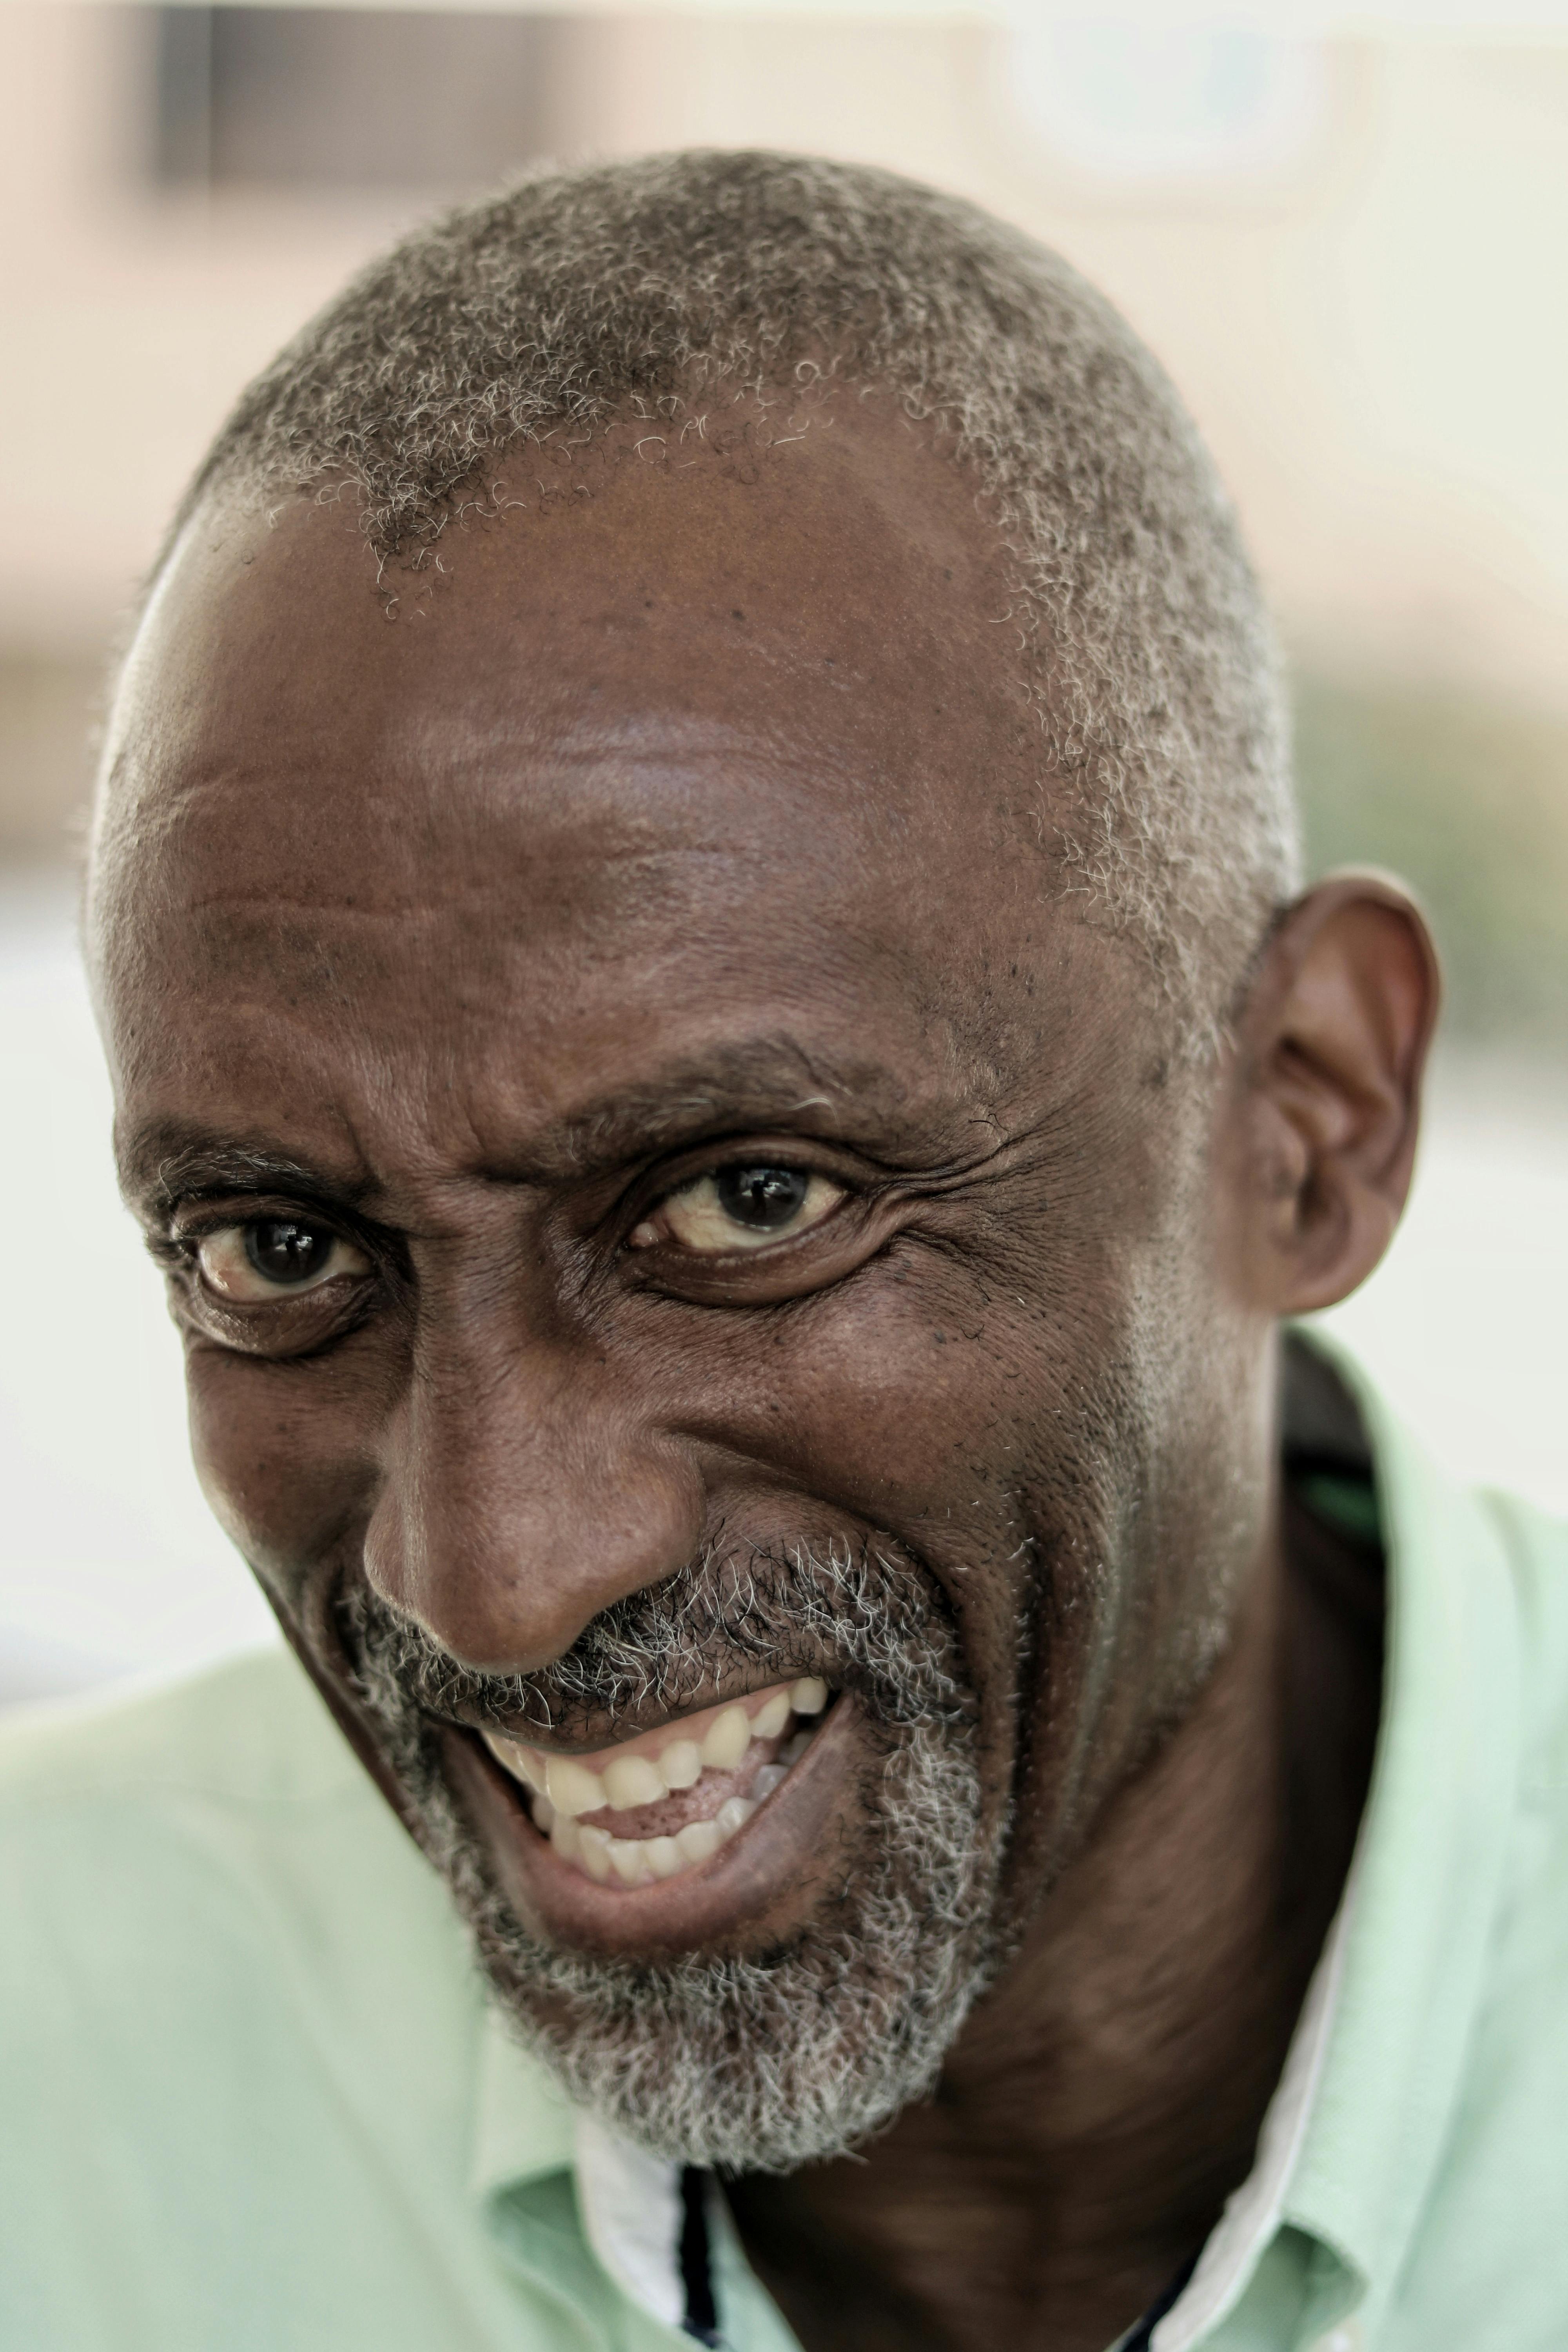 Cheerful black man with short hair and beard · Free Stock Photo